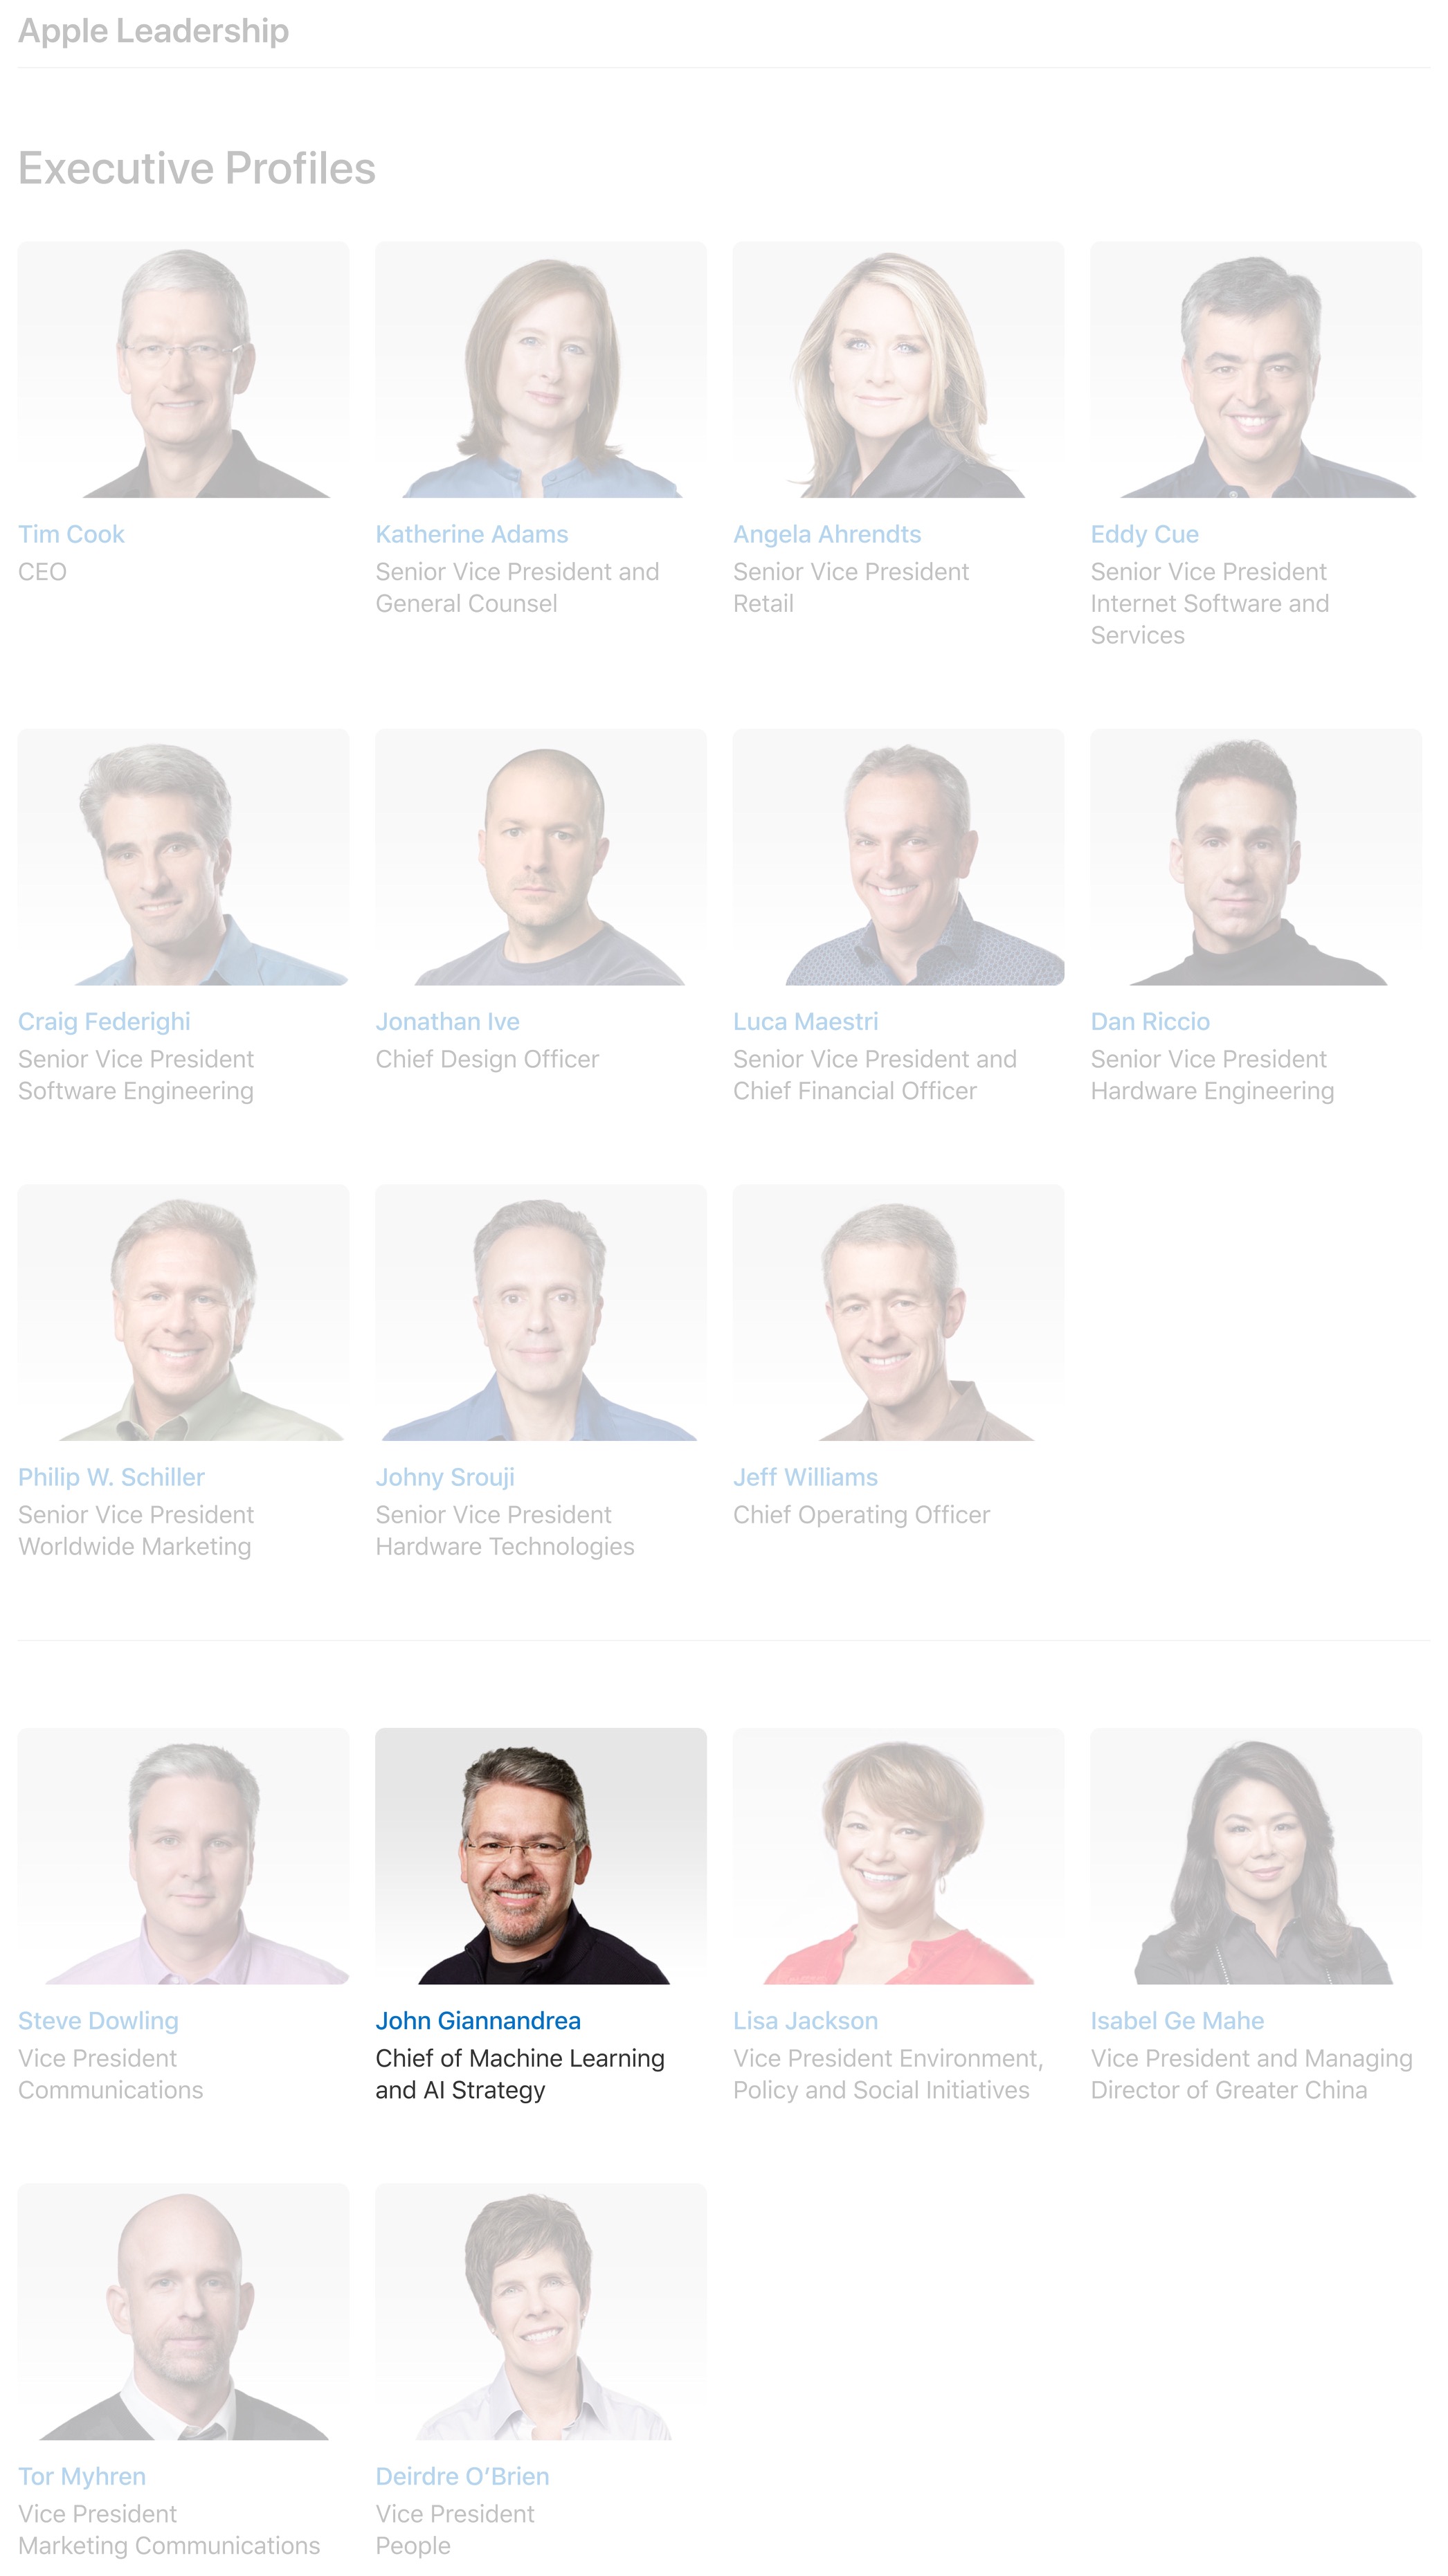 John Giannandrea na página de liderança da Apple